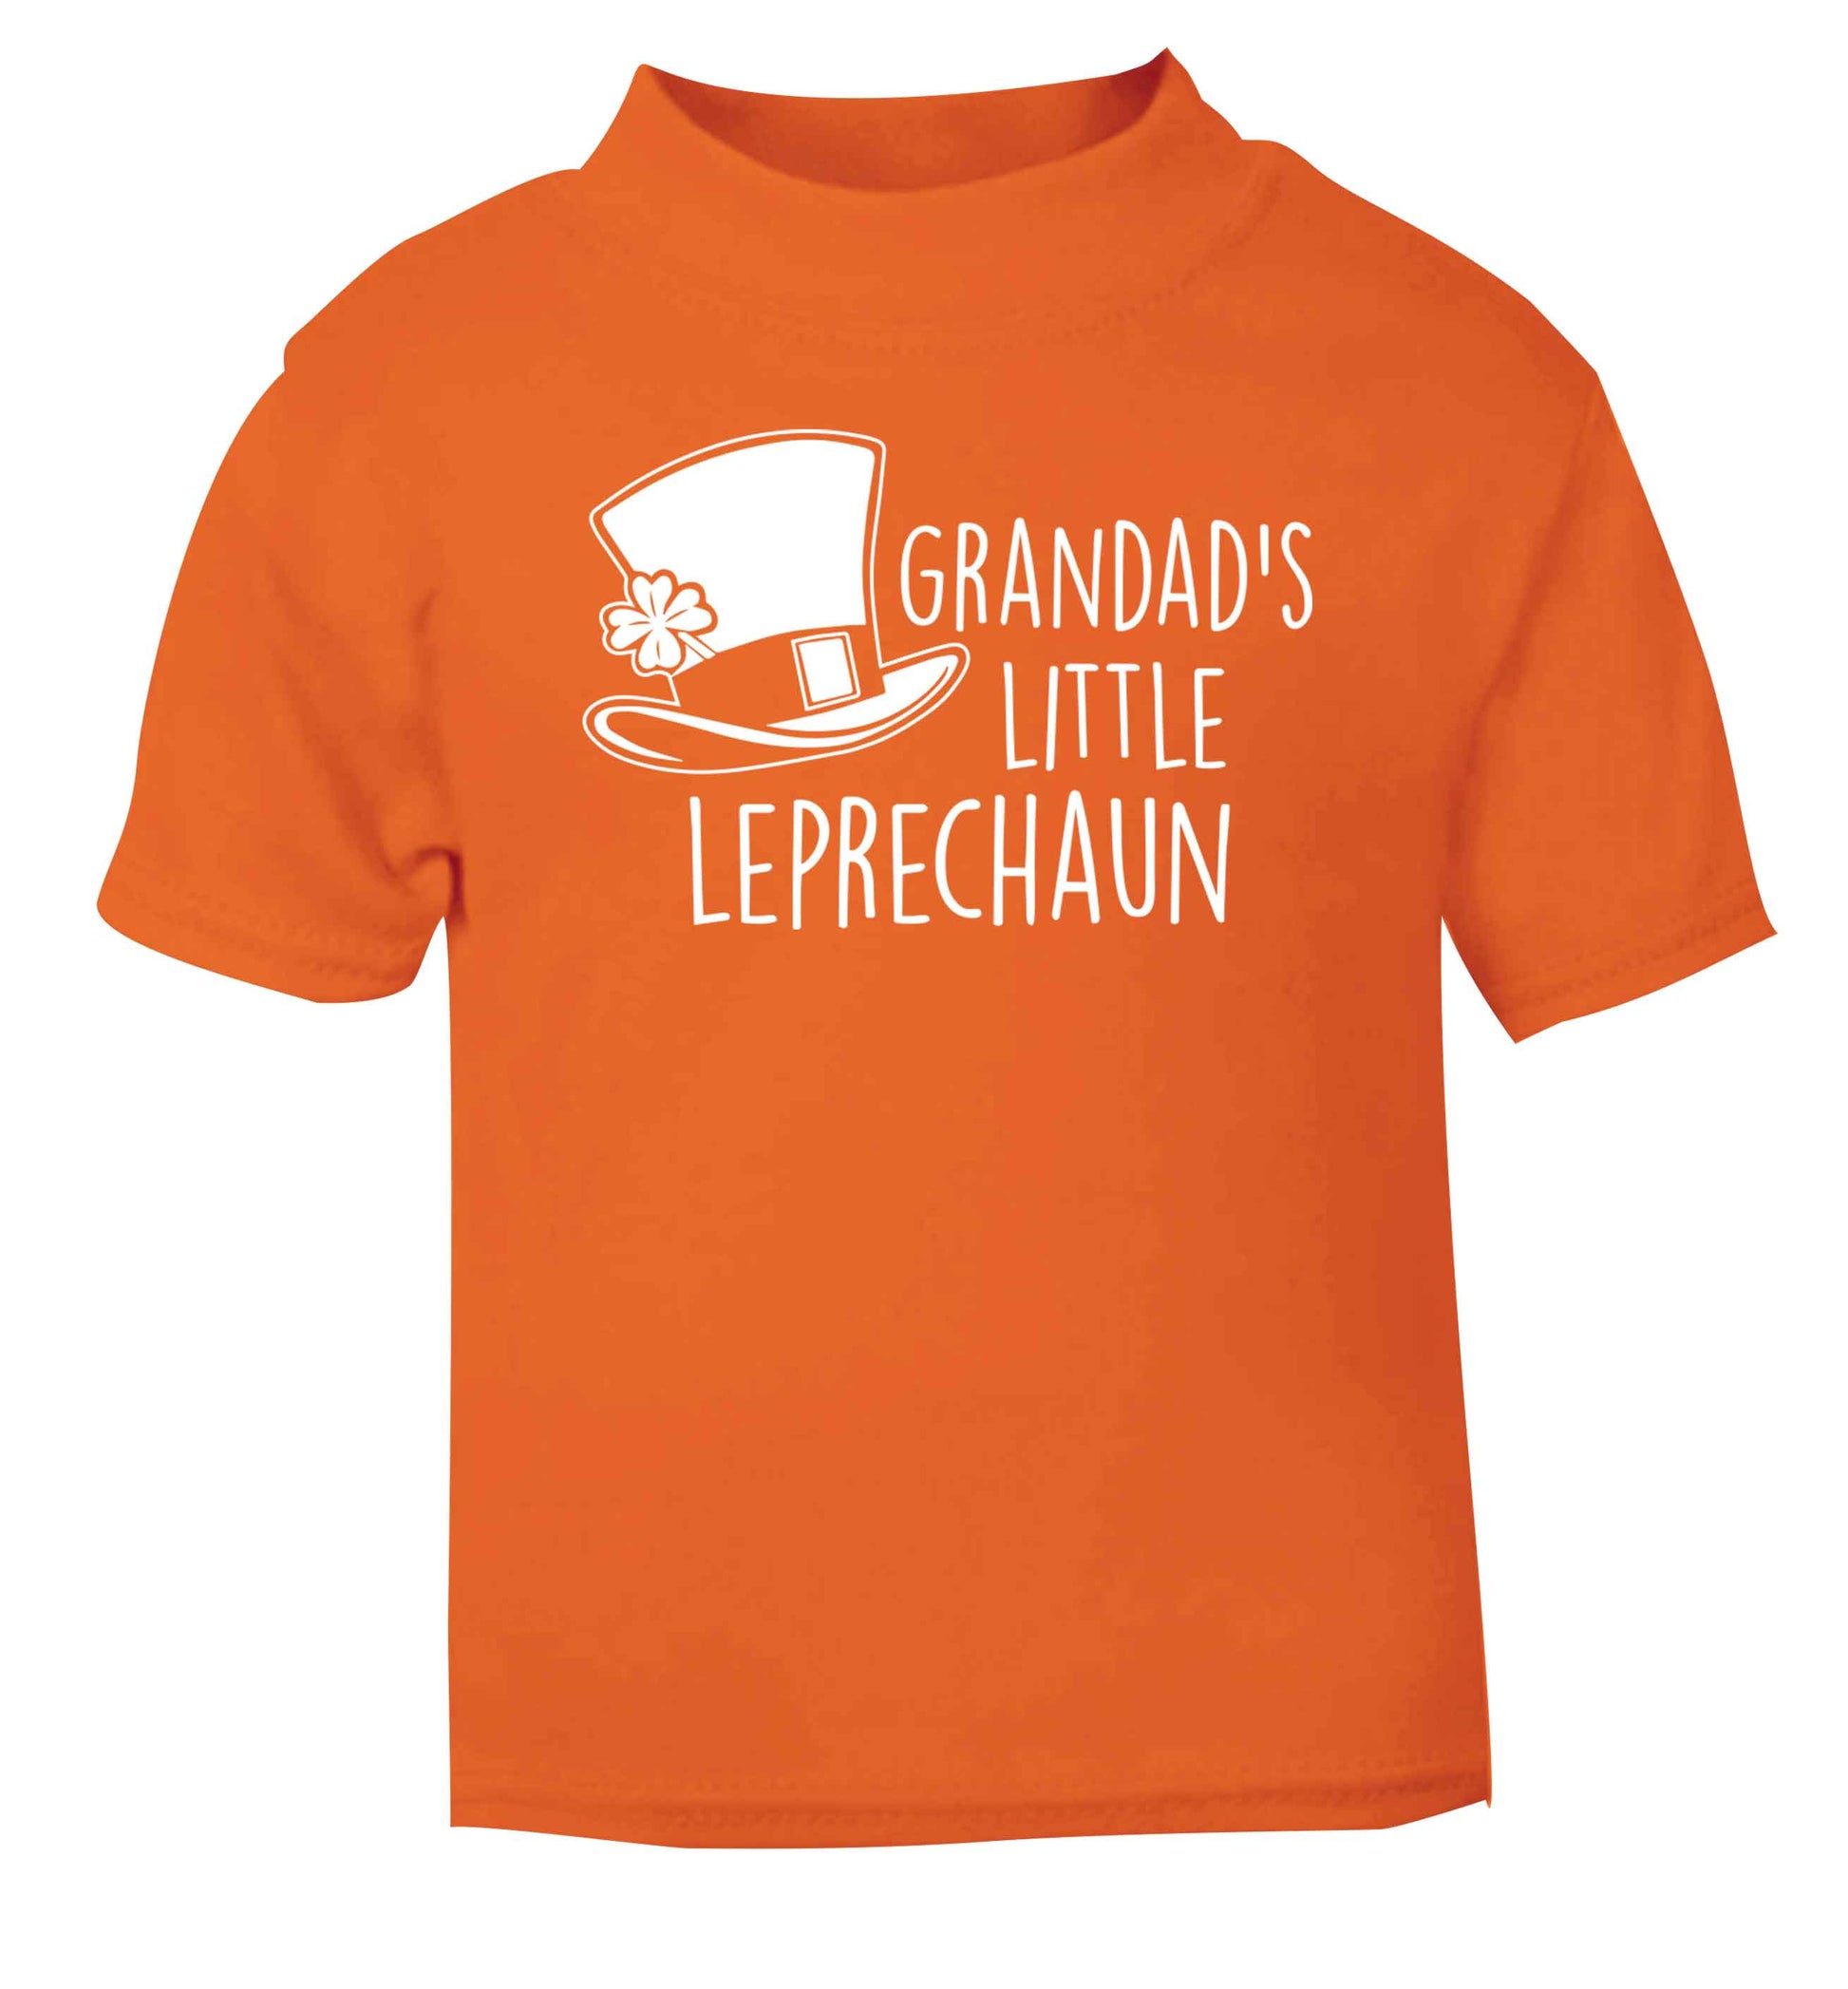 Grandad's little leprechaun orange baby toddler Tshirt 2 Years